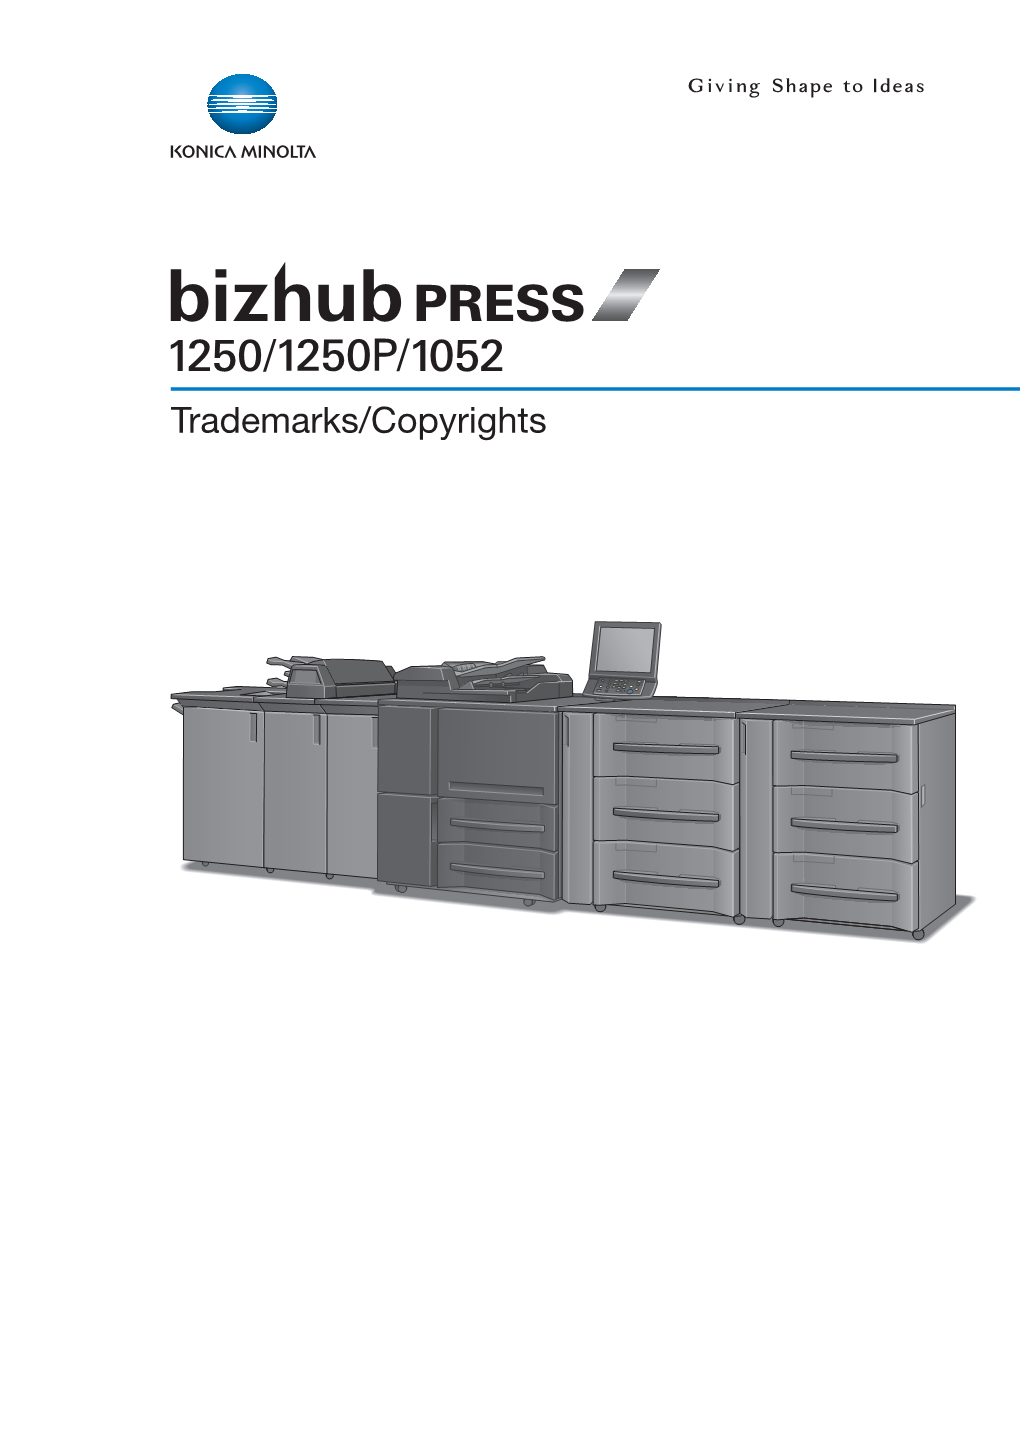 Bizhub PRESS 1052/1250/1250P Trademarks/Copyrights